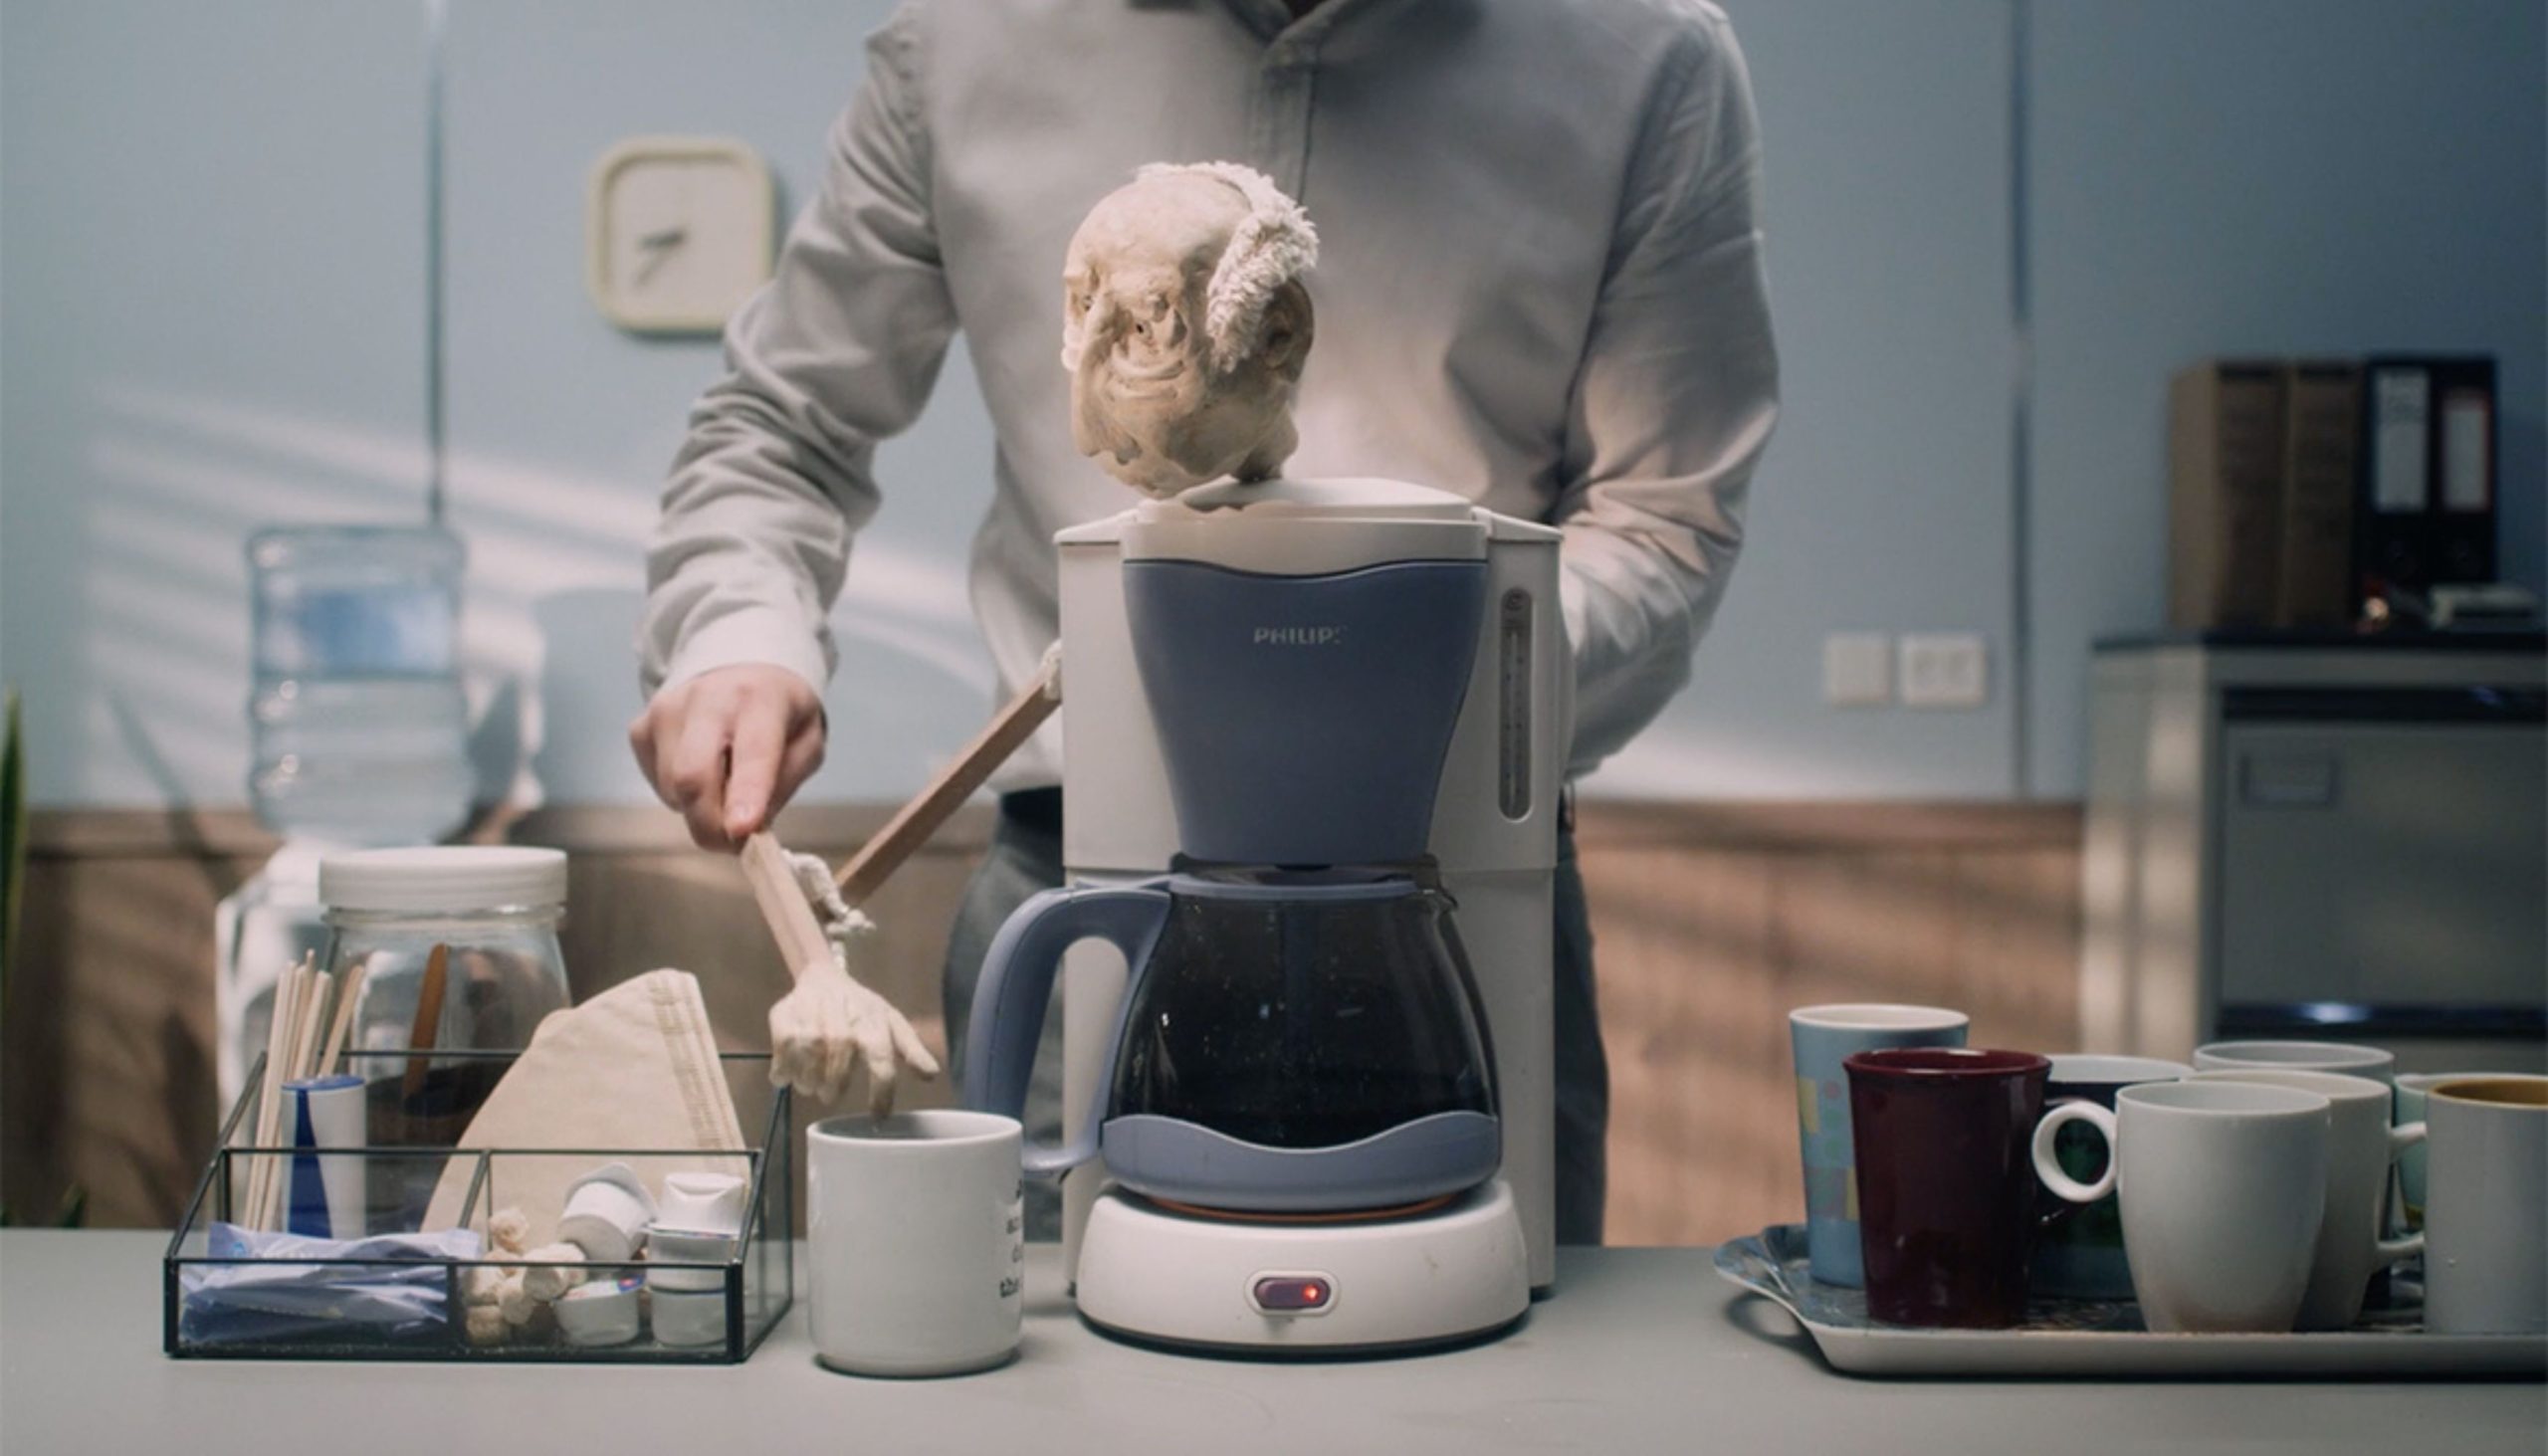 philip-the-coffee-maker-video